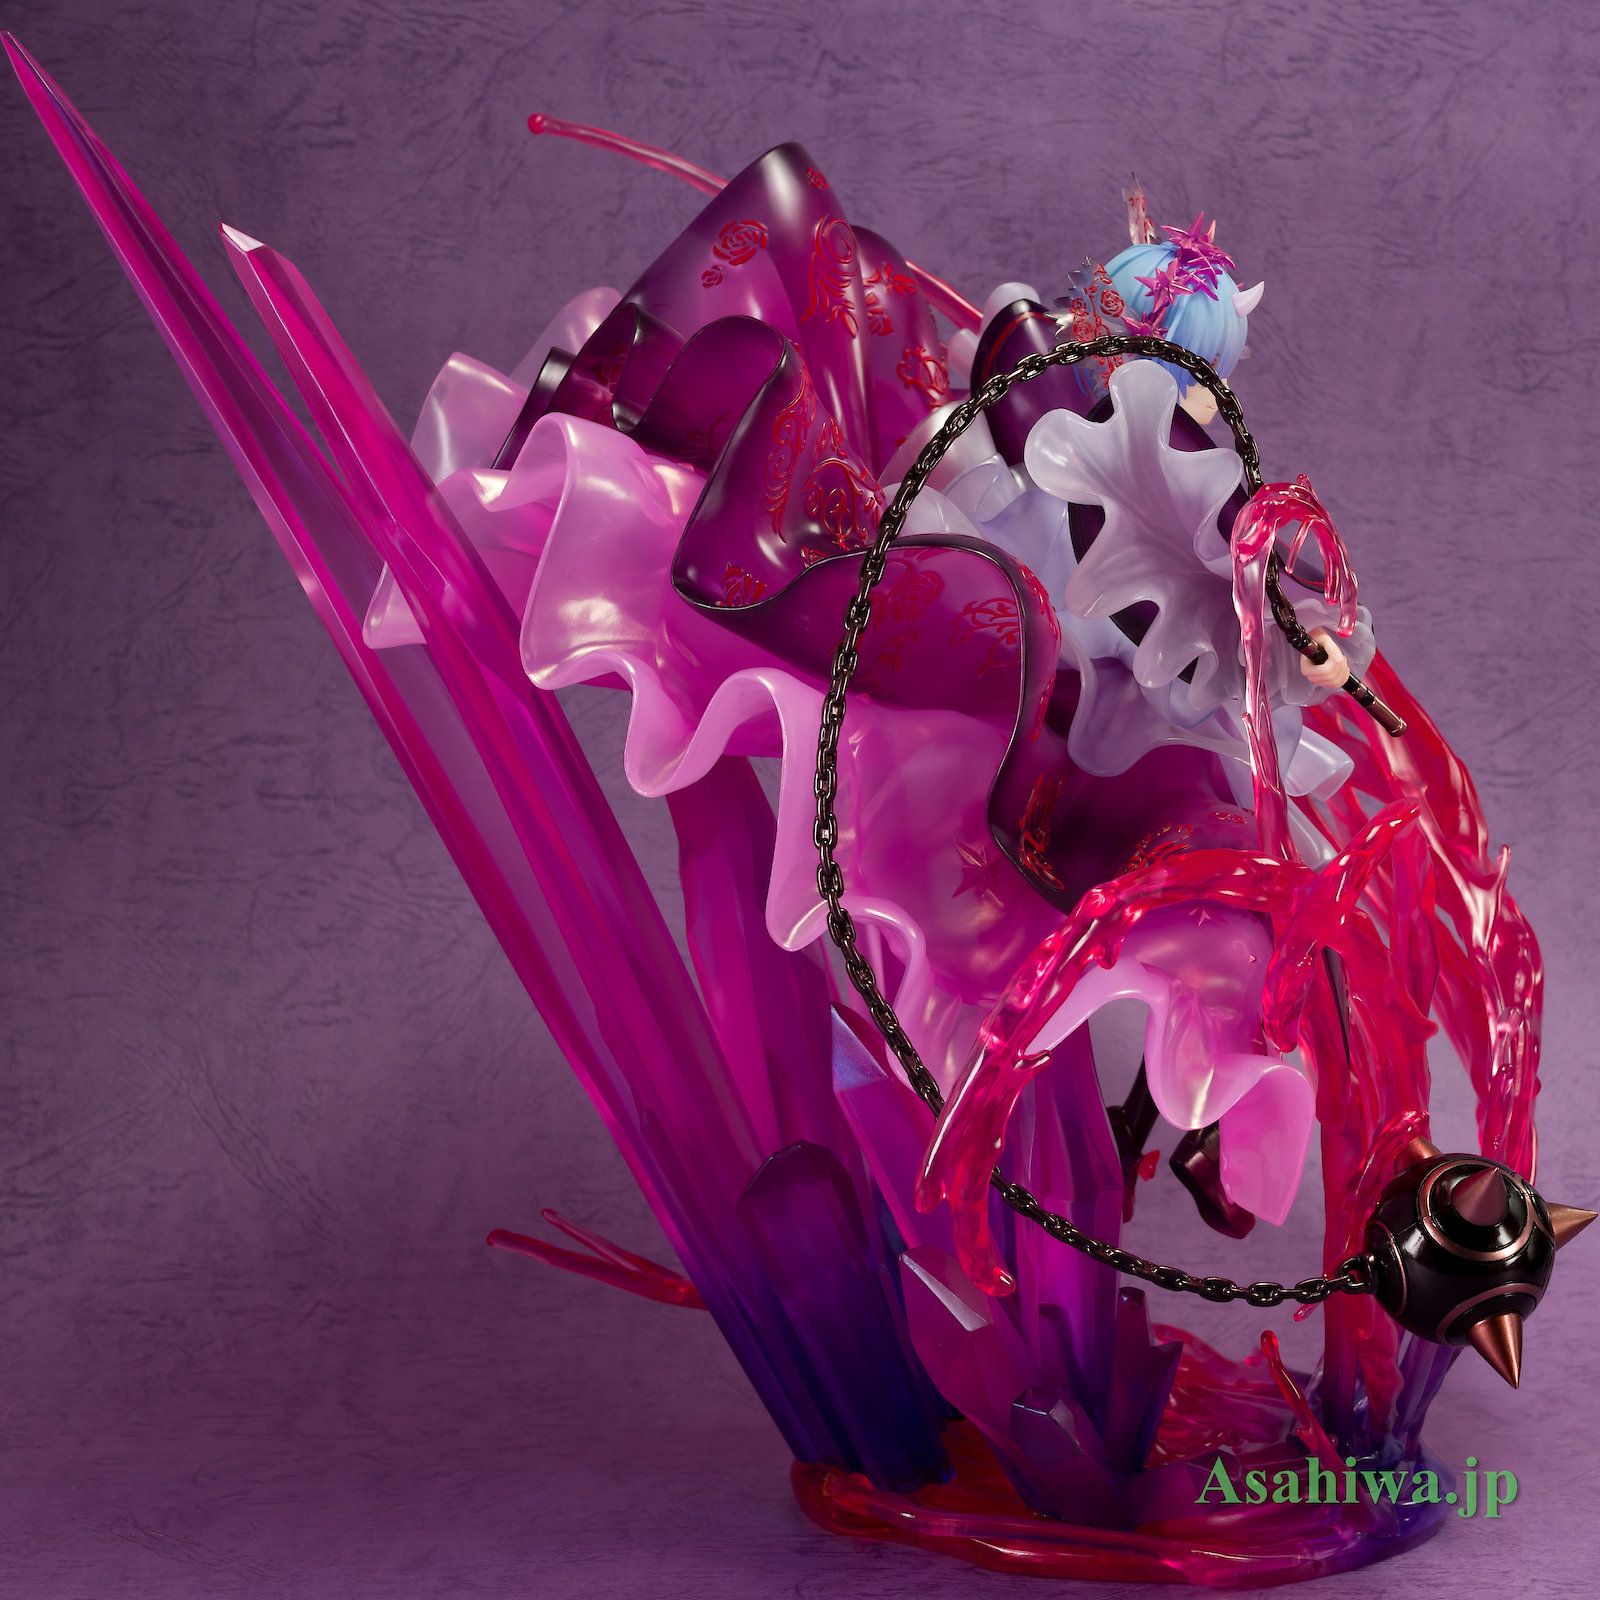 SHIBUYA SCRAMBLE FIGURE 鬼レム -Crystal Dress Ver- Re:ゼロから始める異世界生活 よつばと